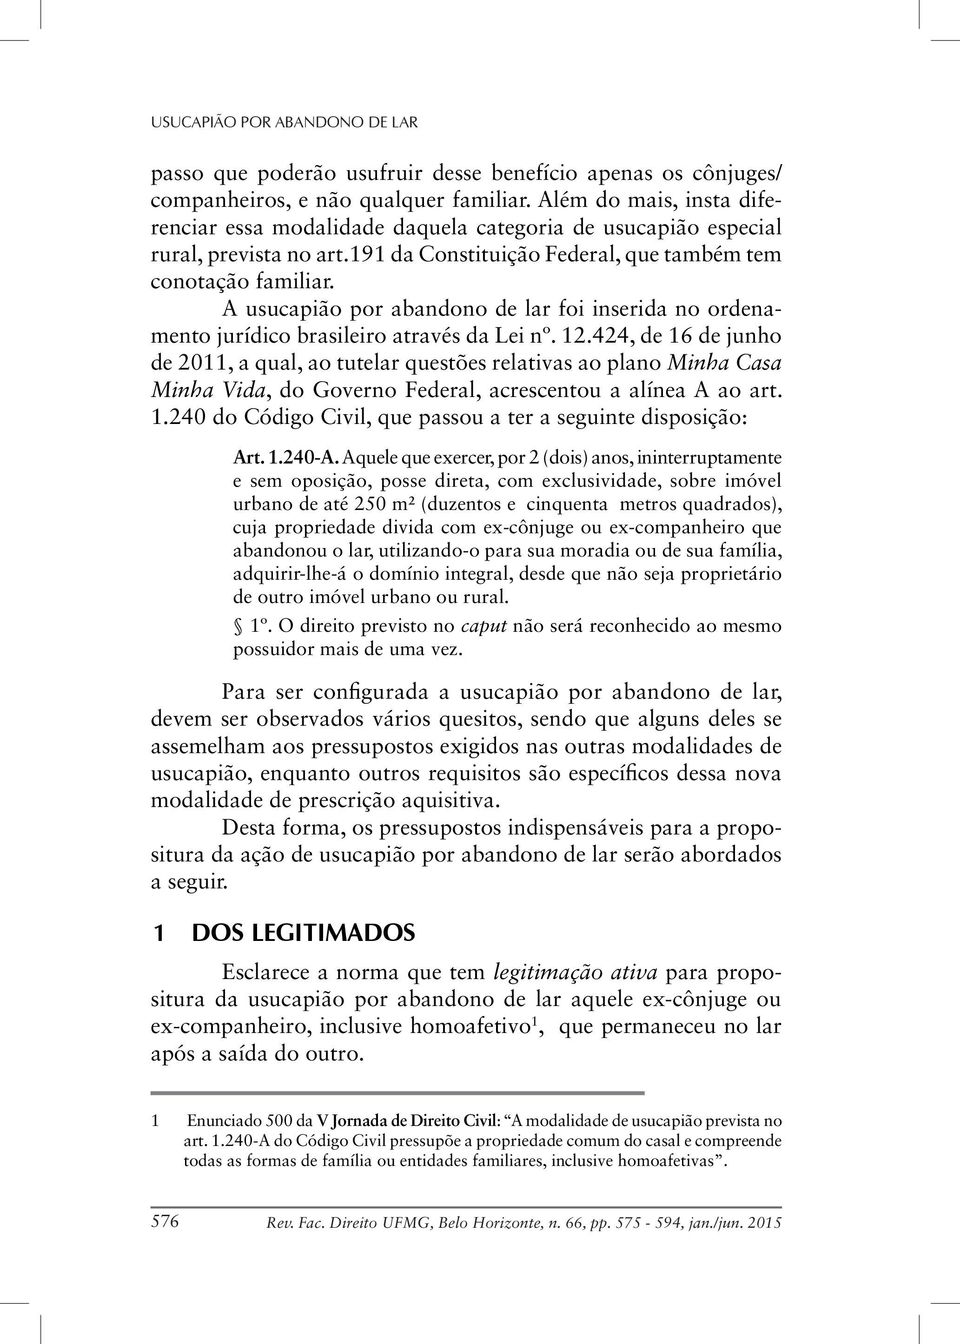 A usucapião por abandono de lar foi inserida no ordenamento jurídico brasileiro através da Lei nº. 12.